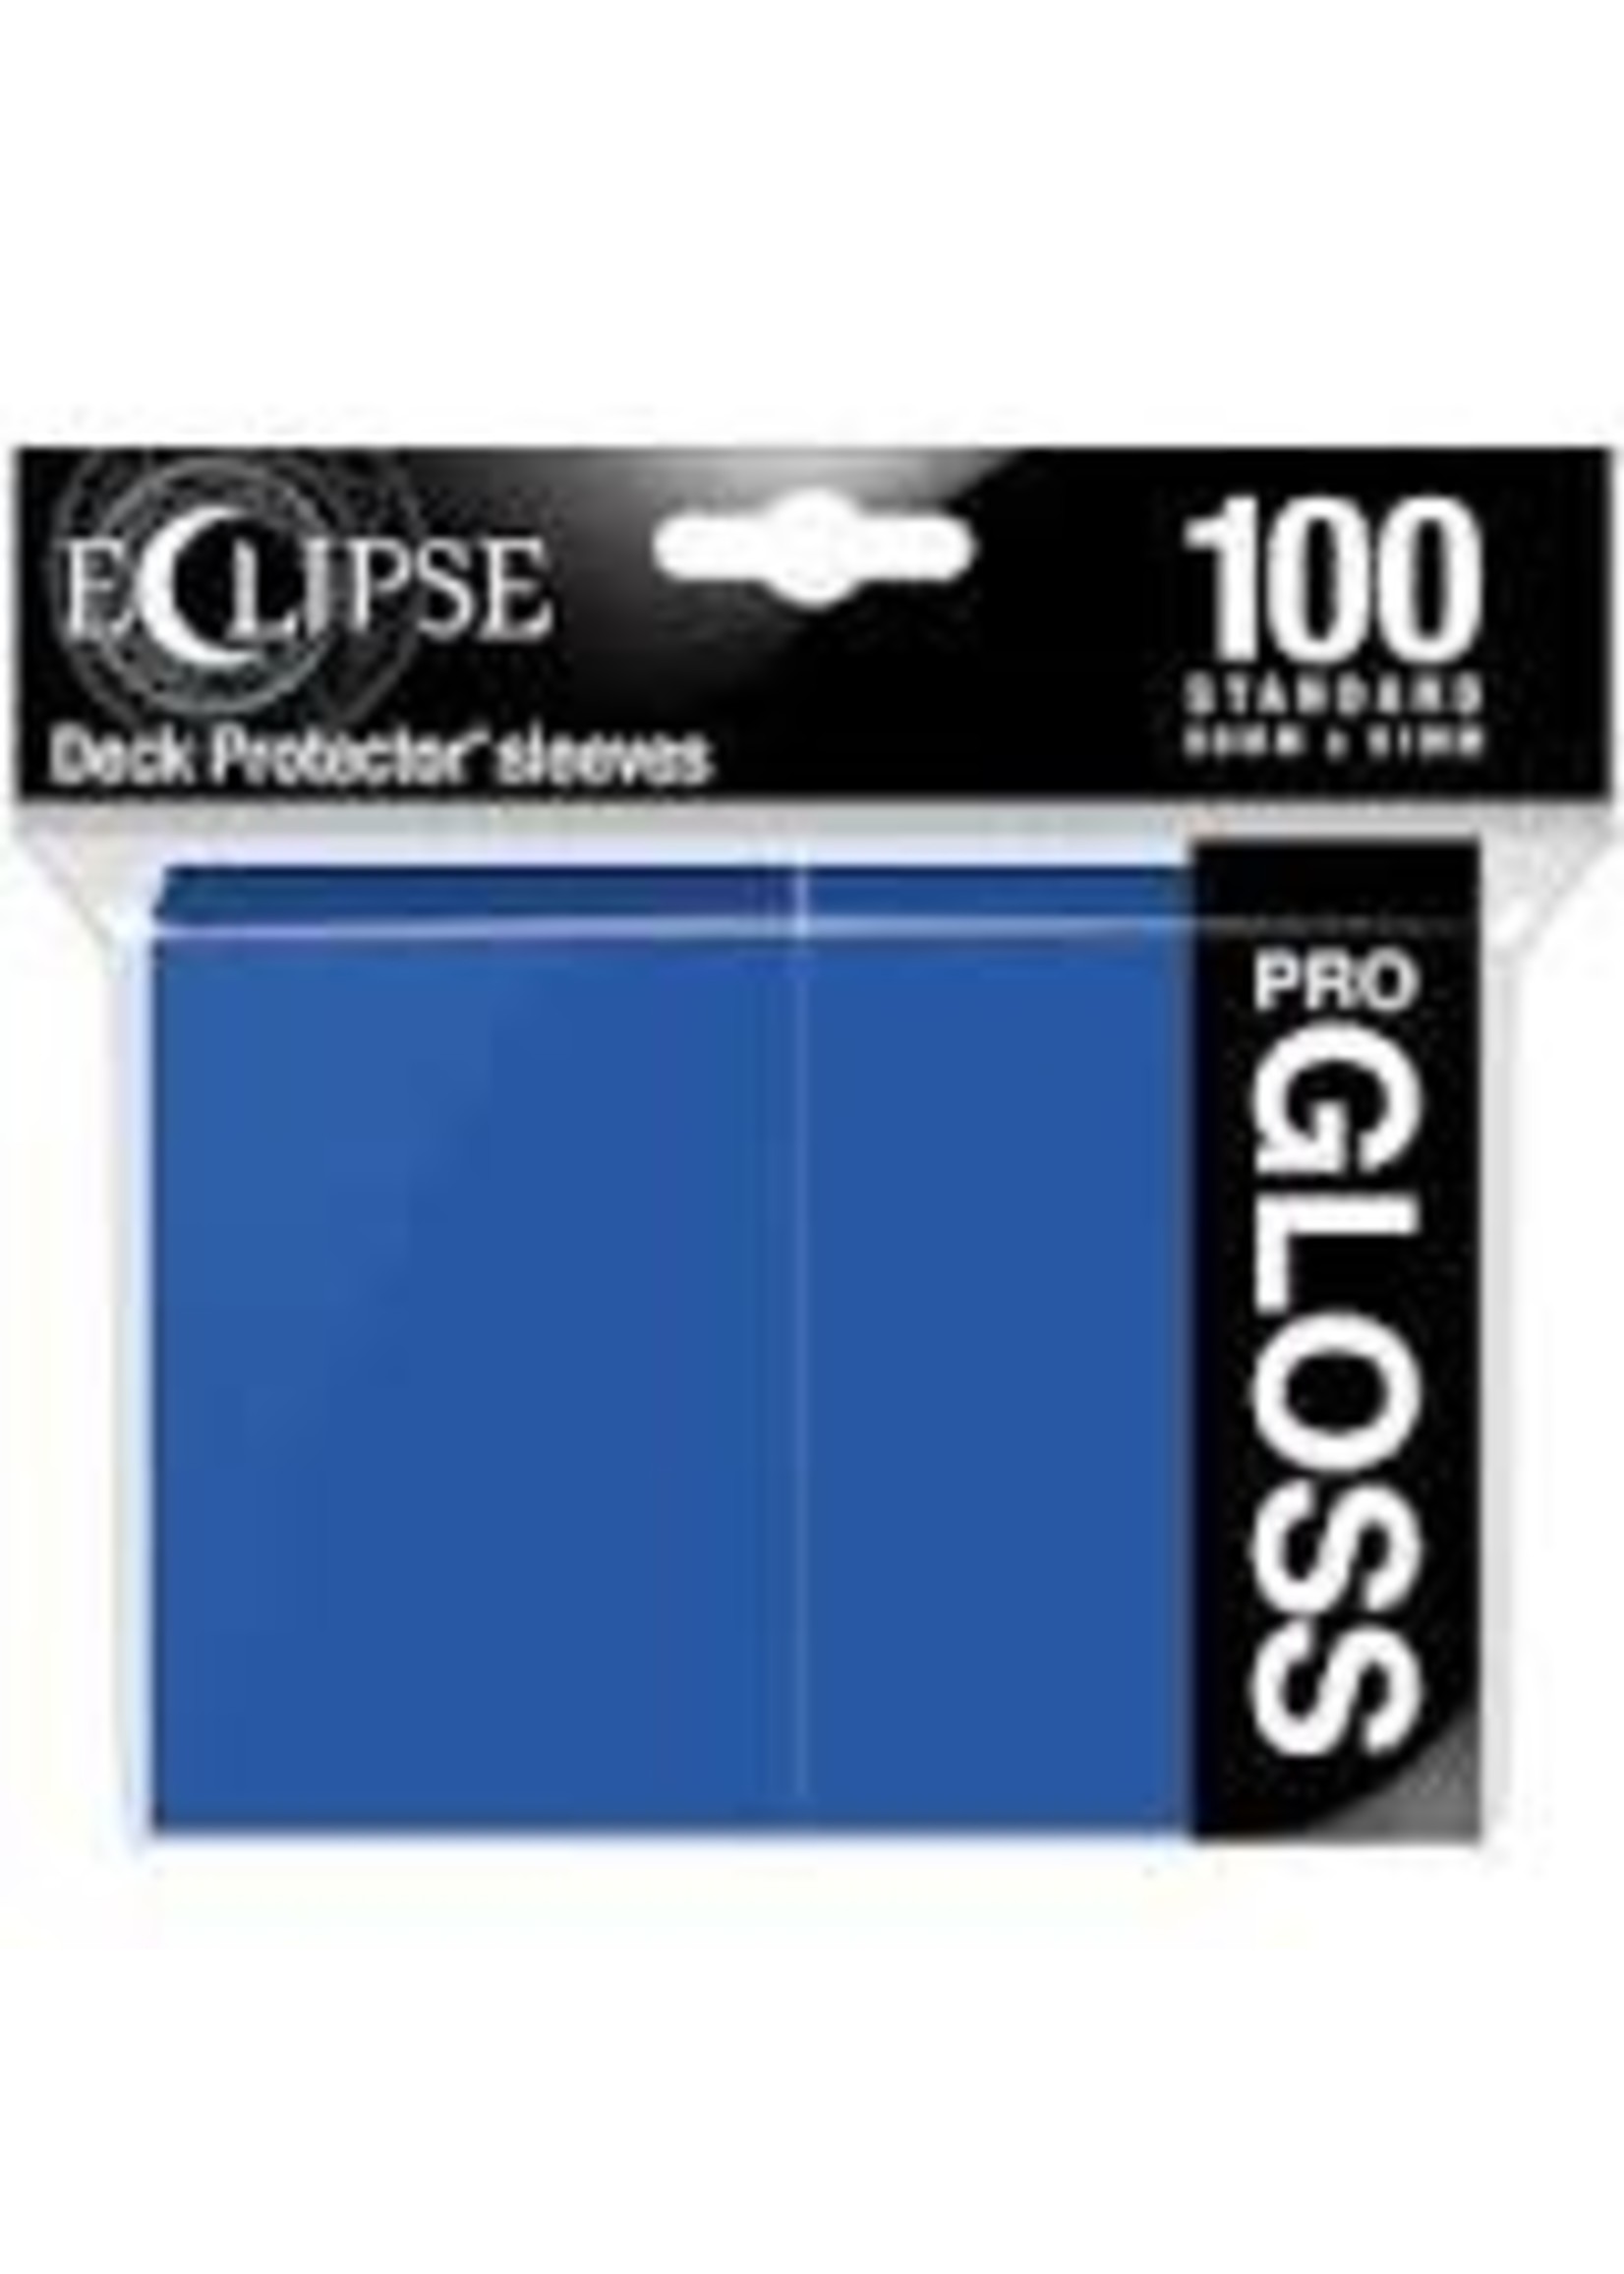 Ultra Pro Deck Protectors: Eclipse Gloss: Pacific Blue (100)